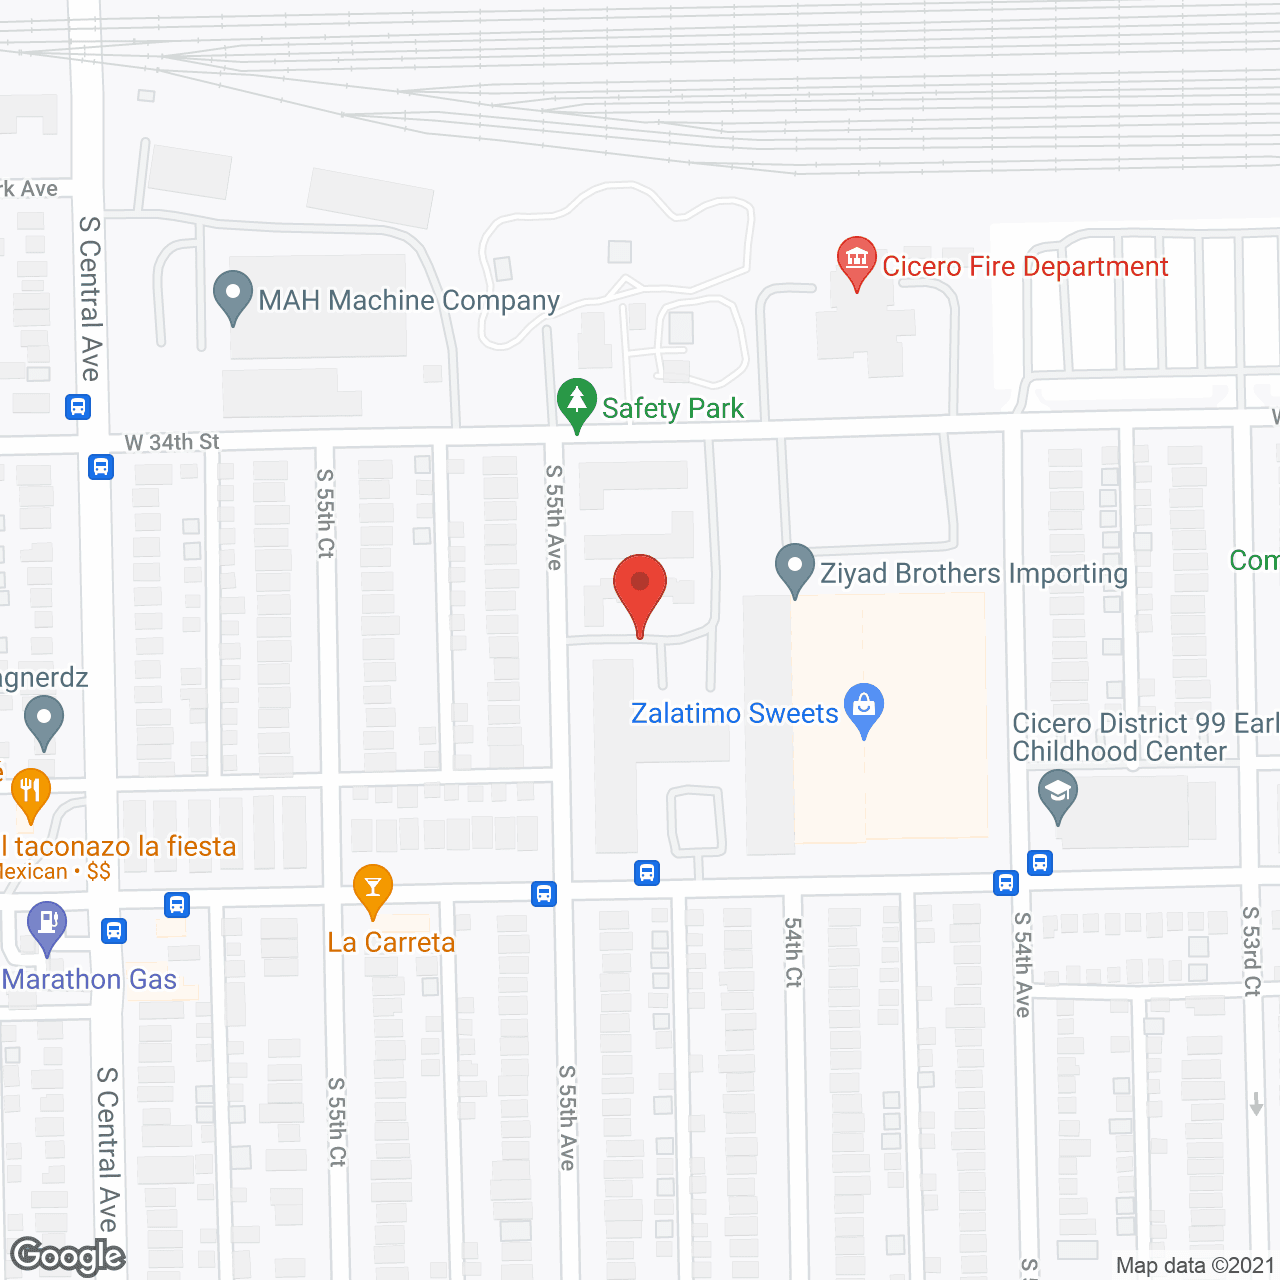 Drexel Horizon in google map